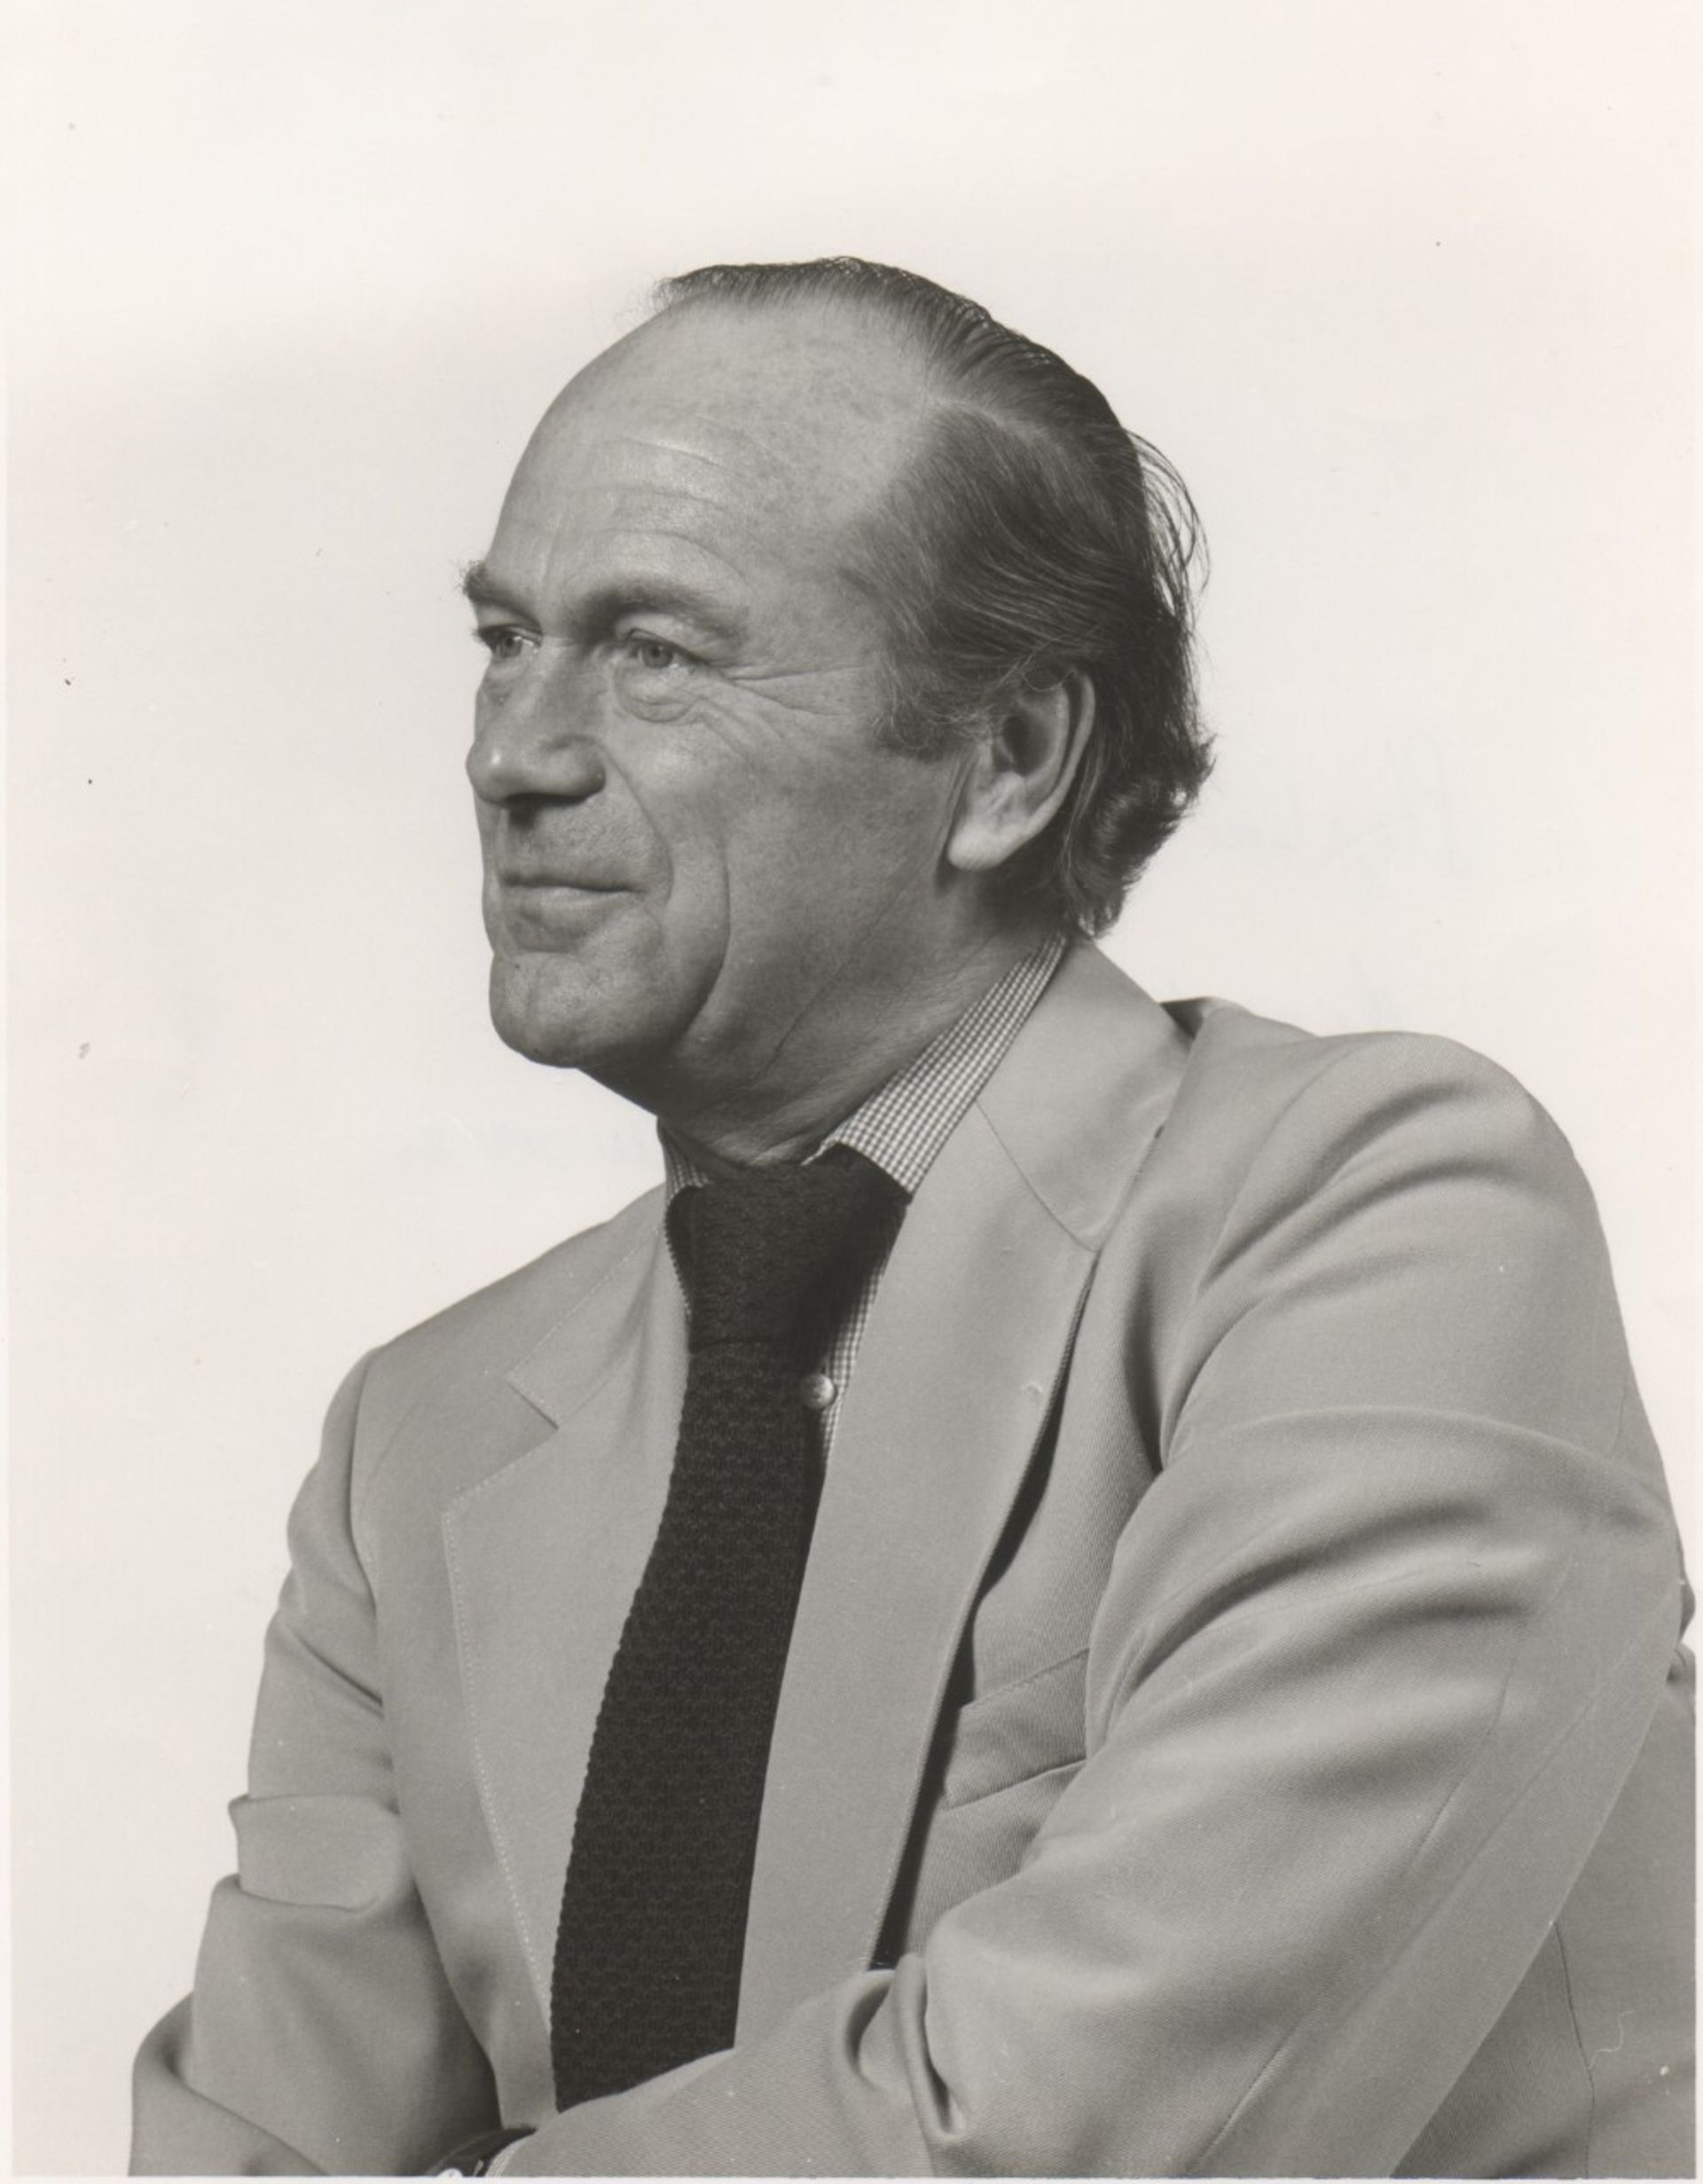 Stephen Garrett around 1979 Courtesy of J. Paul Getty Trust